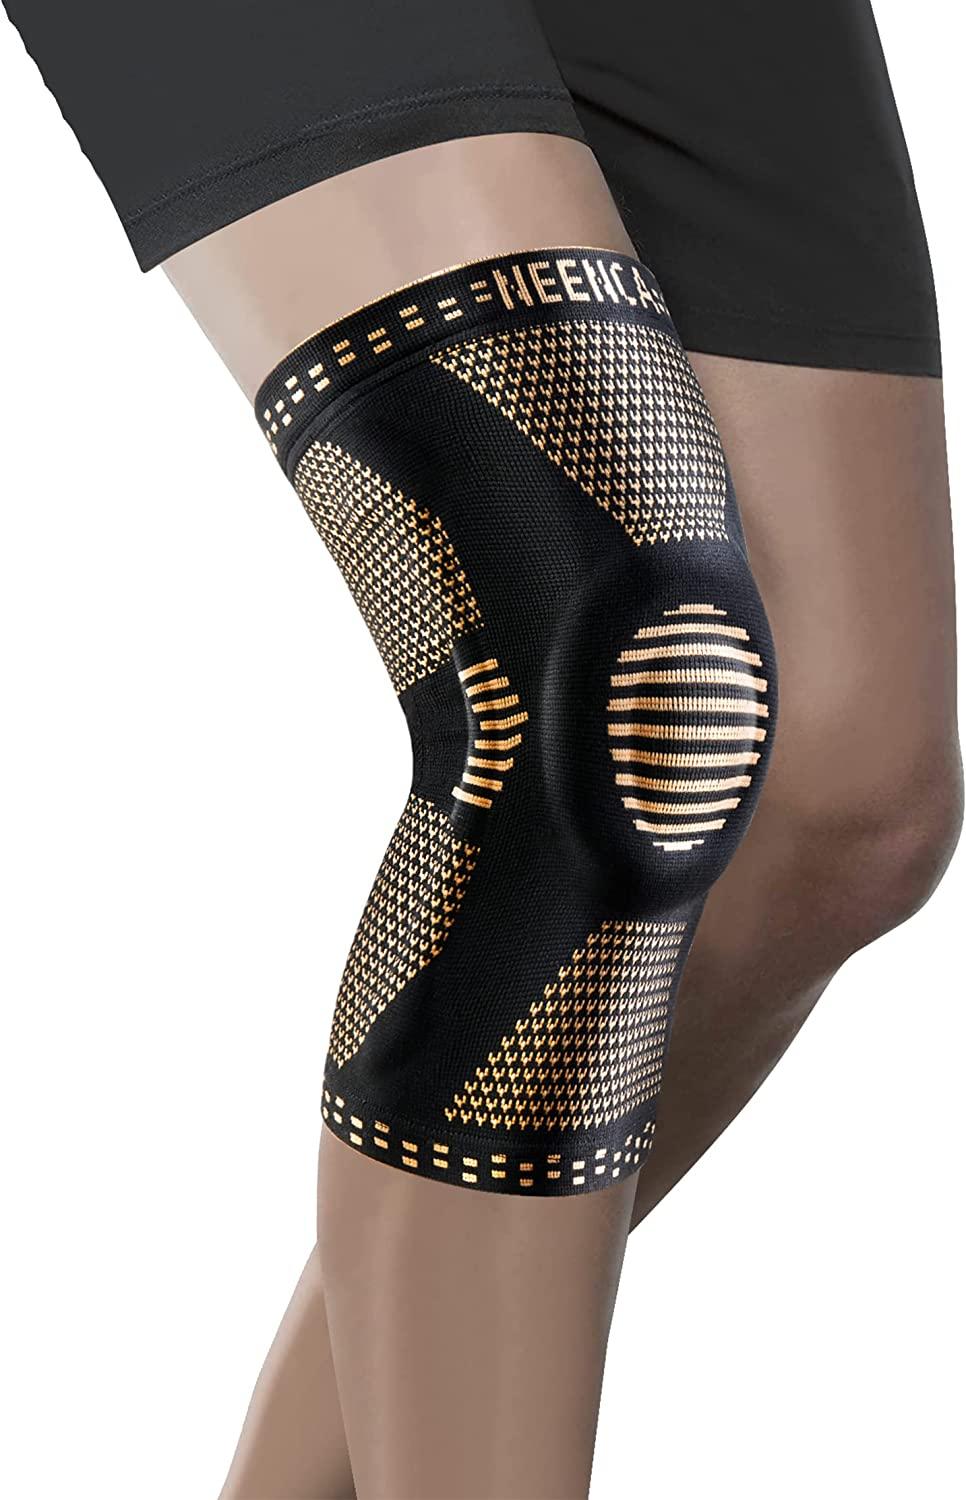 Neenca Knee Support Compression Sleeve Brace Patella Arthritis